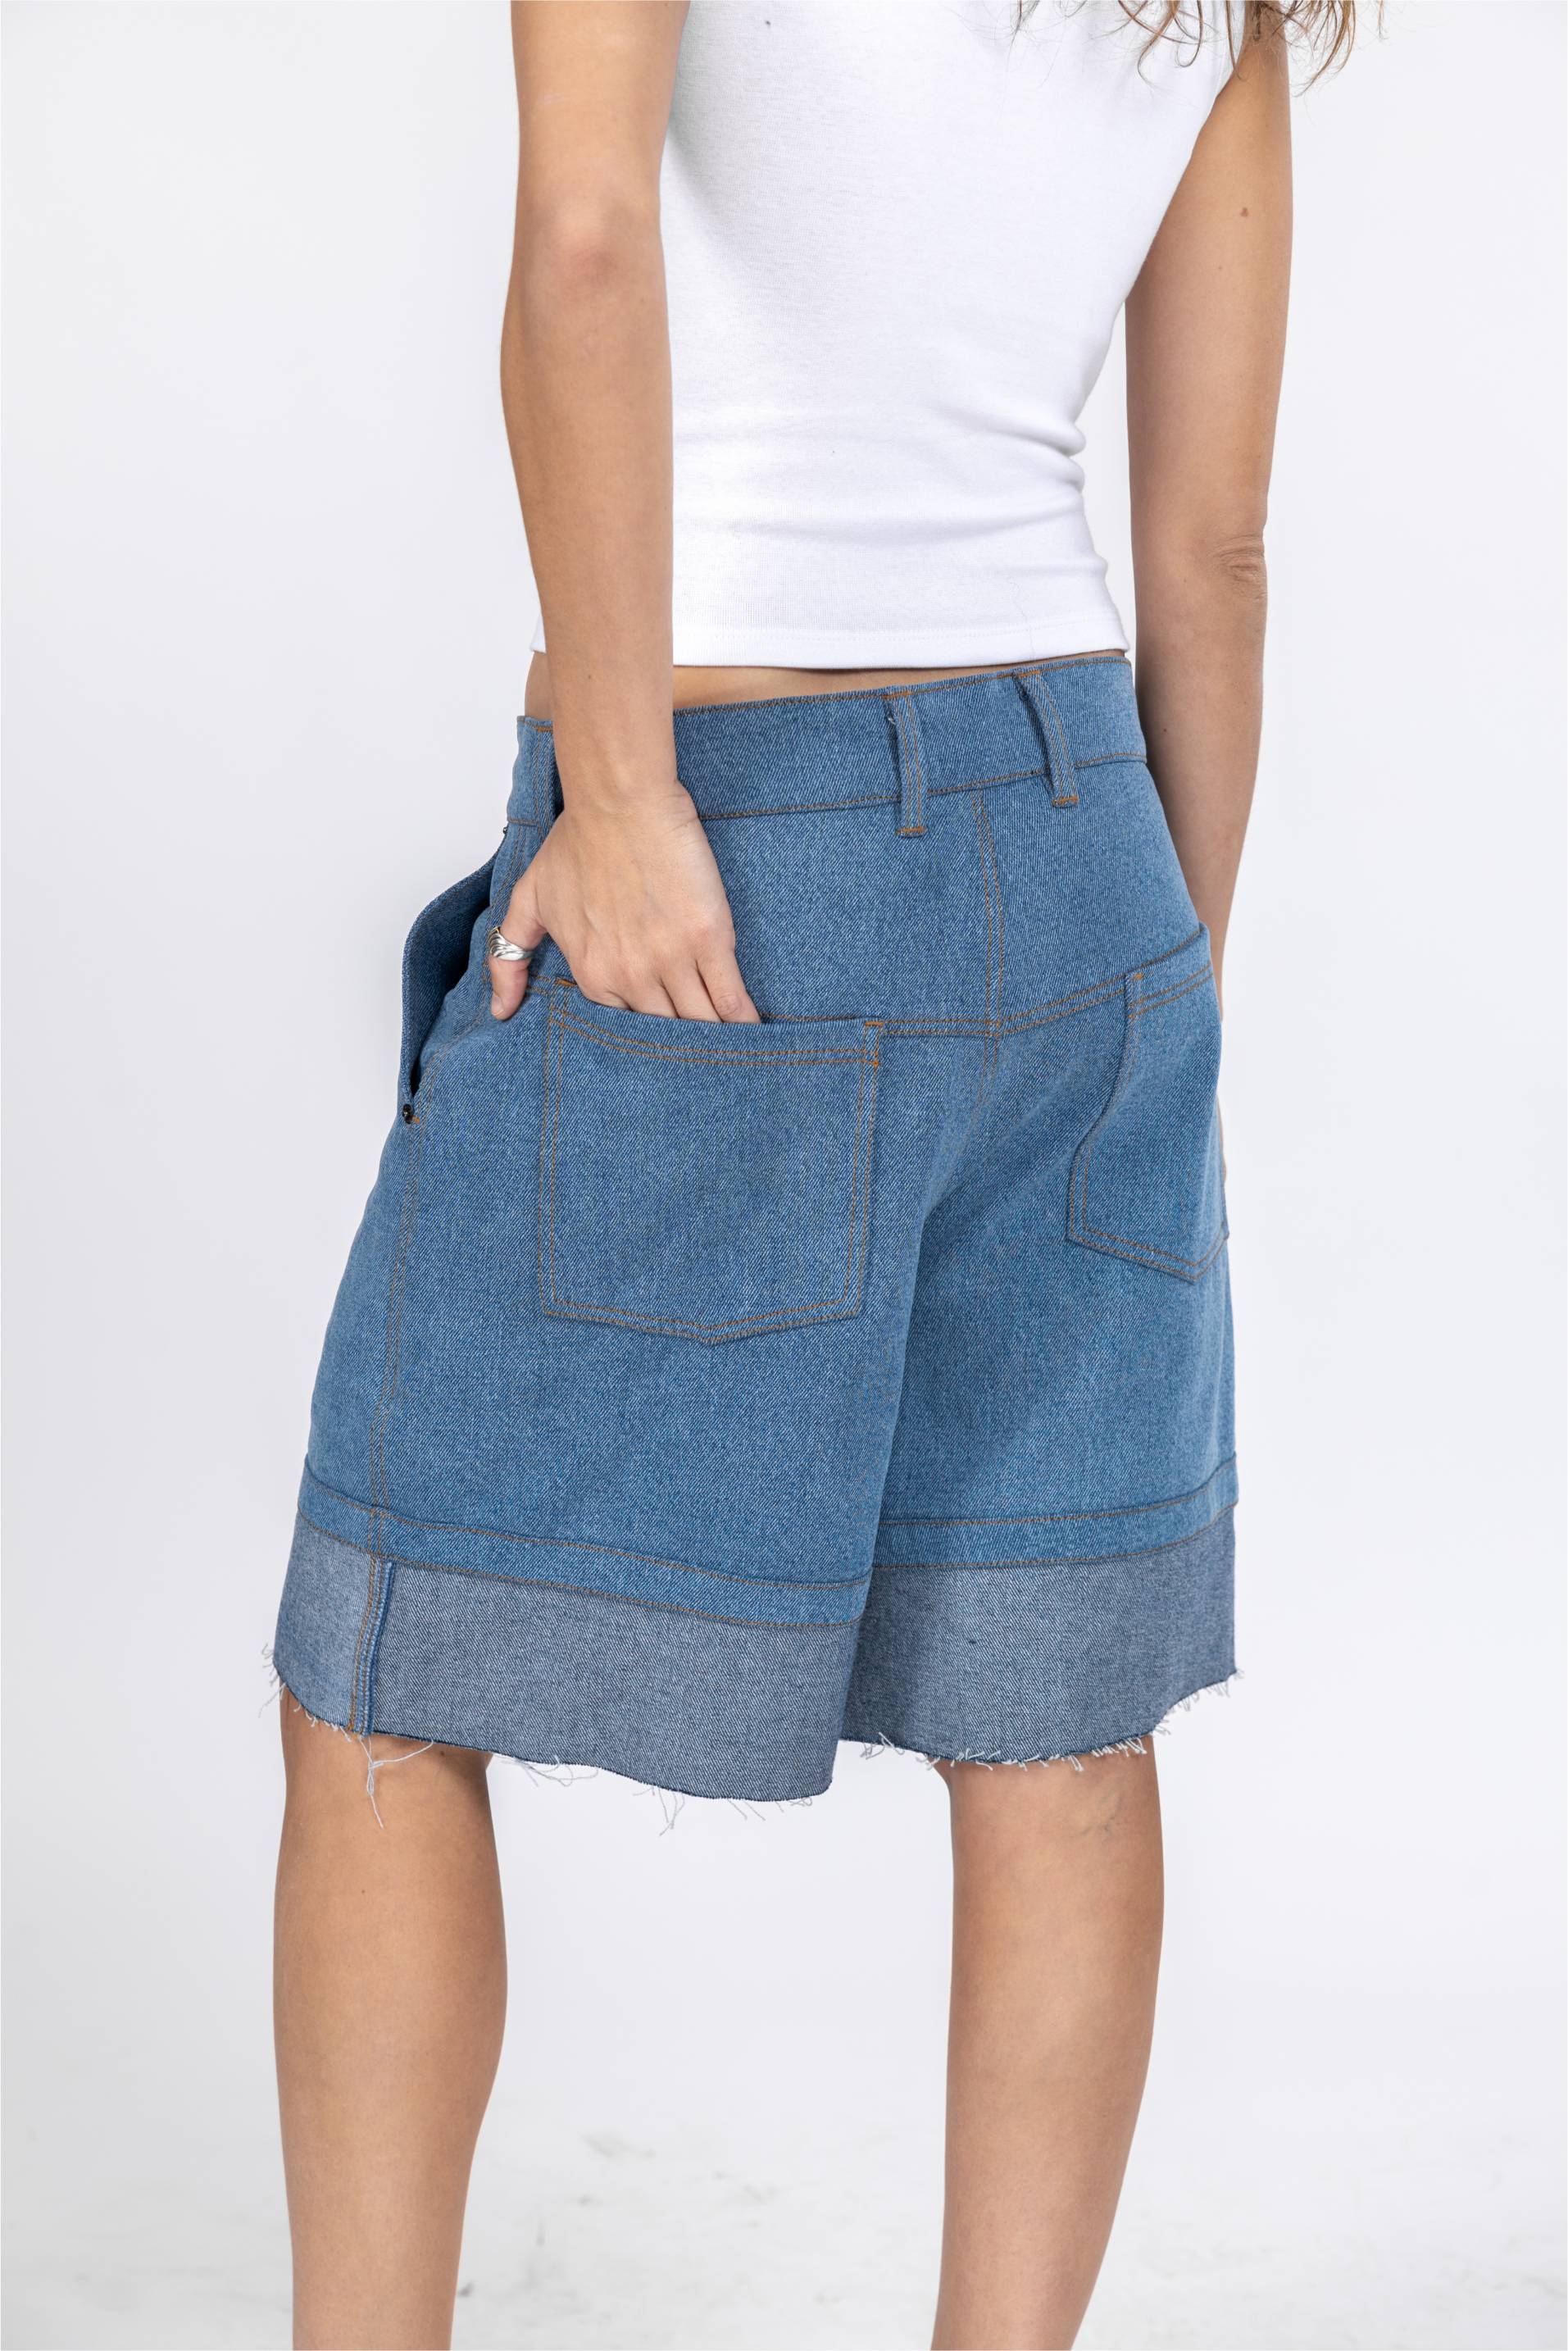 Inverse Denim Shorts - Dull Blue